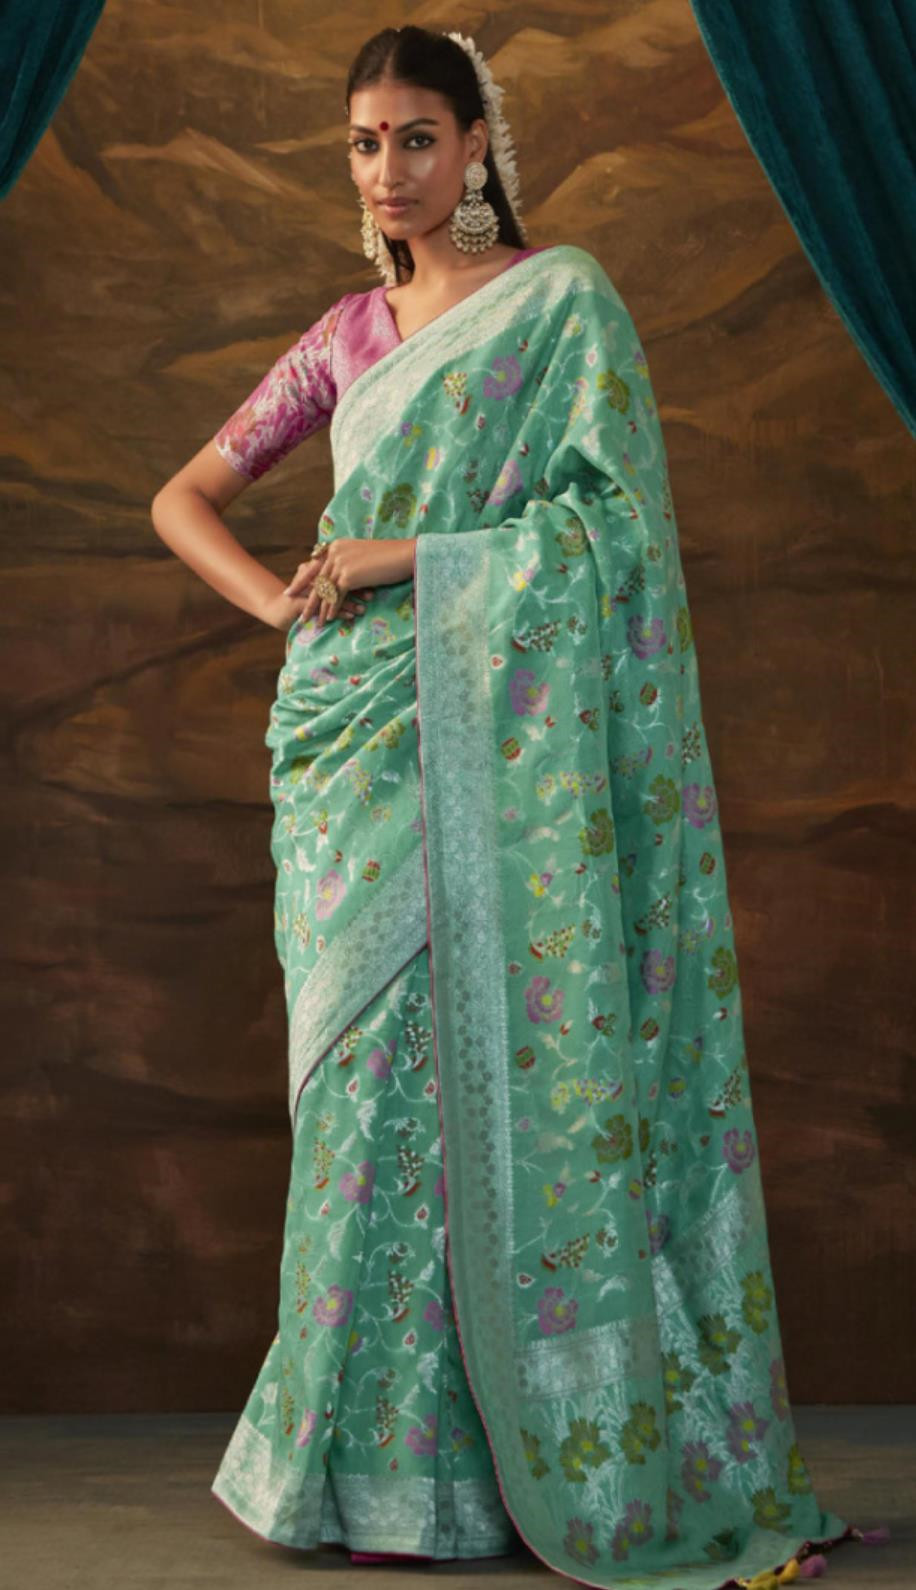 Indian Traditional Clothing Woman Festive Dress India National Sari